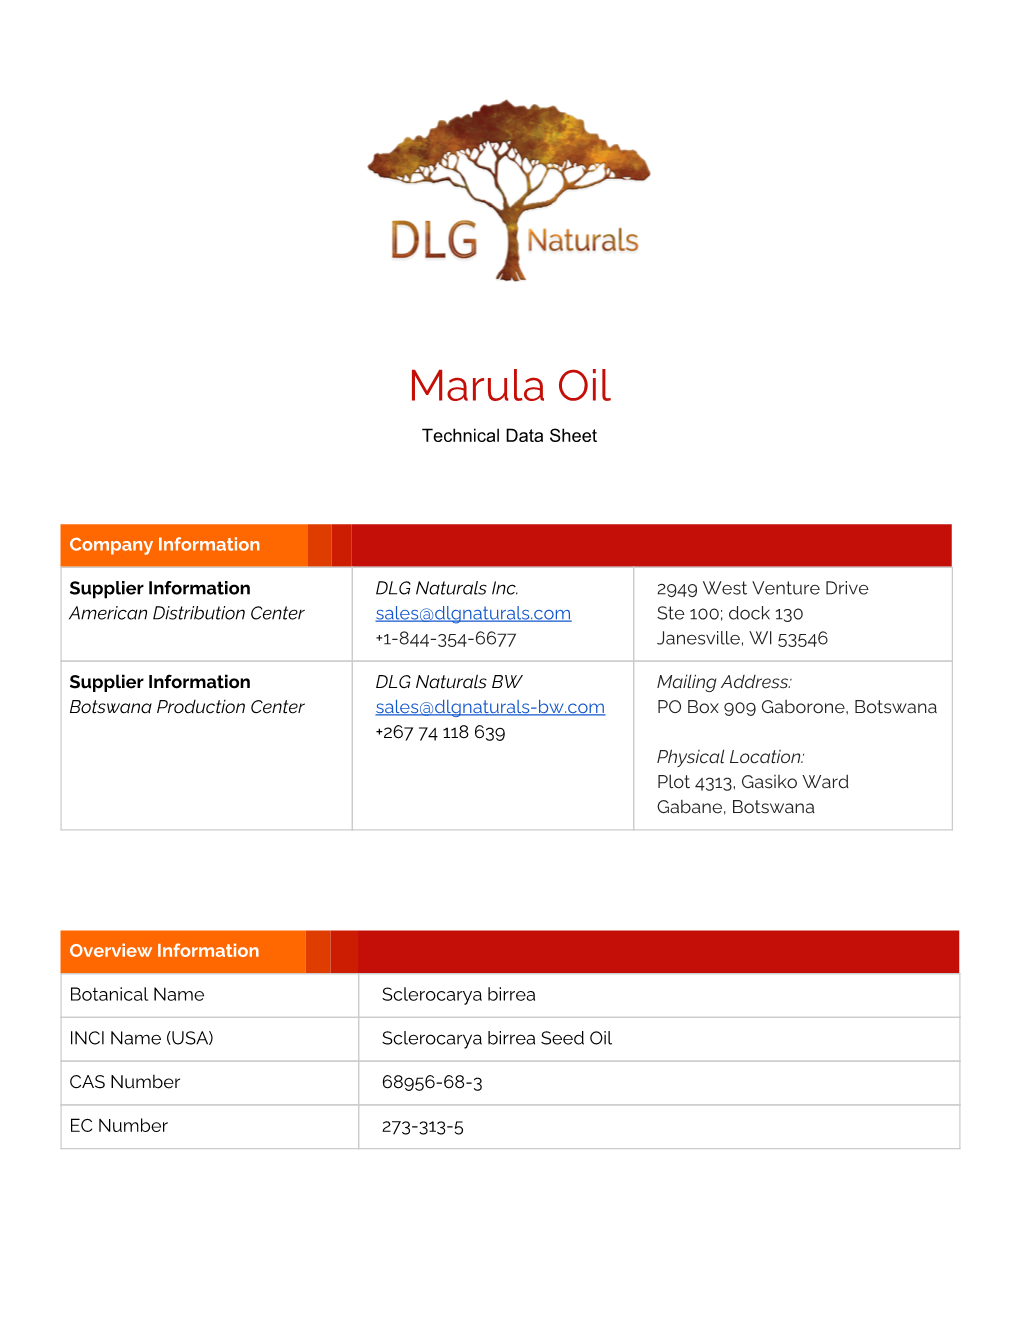 Marula Oil Technical Data Sheet